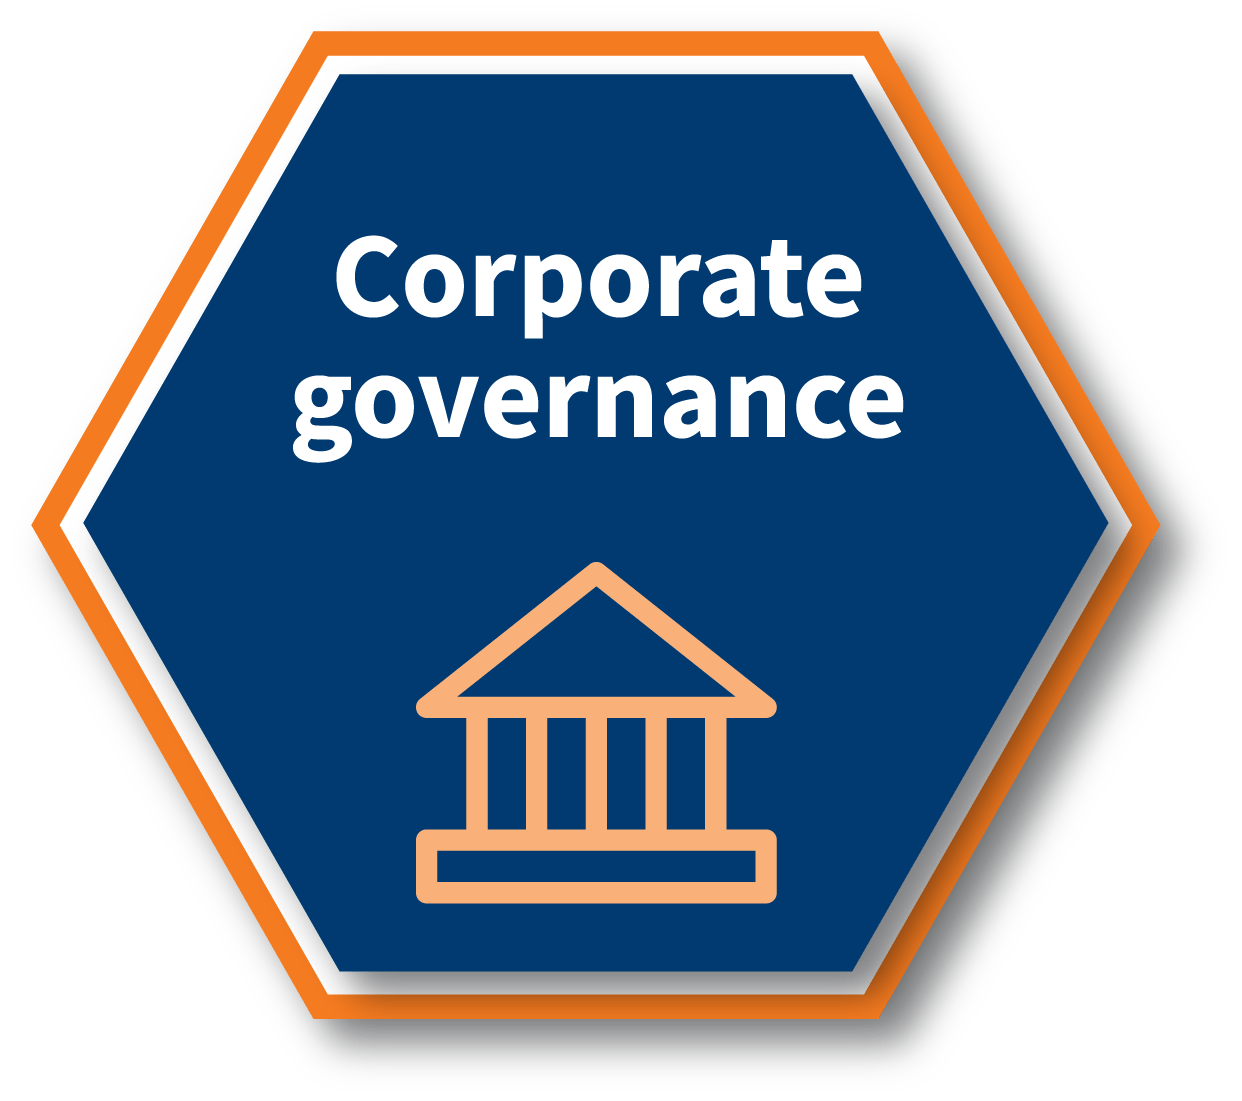 Corporate governance